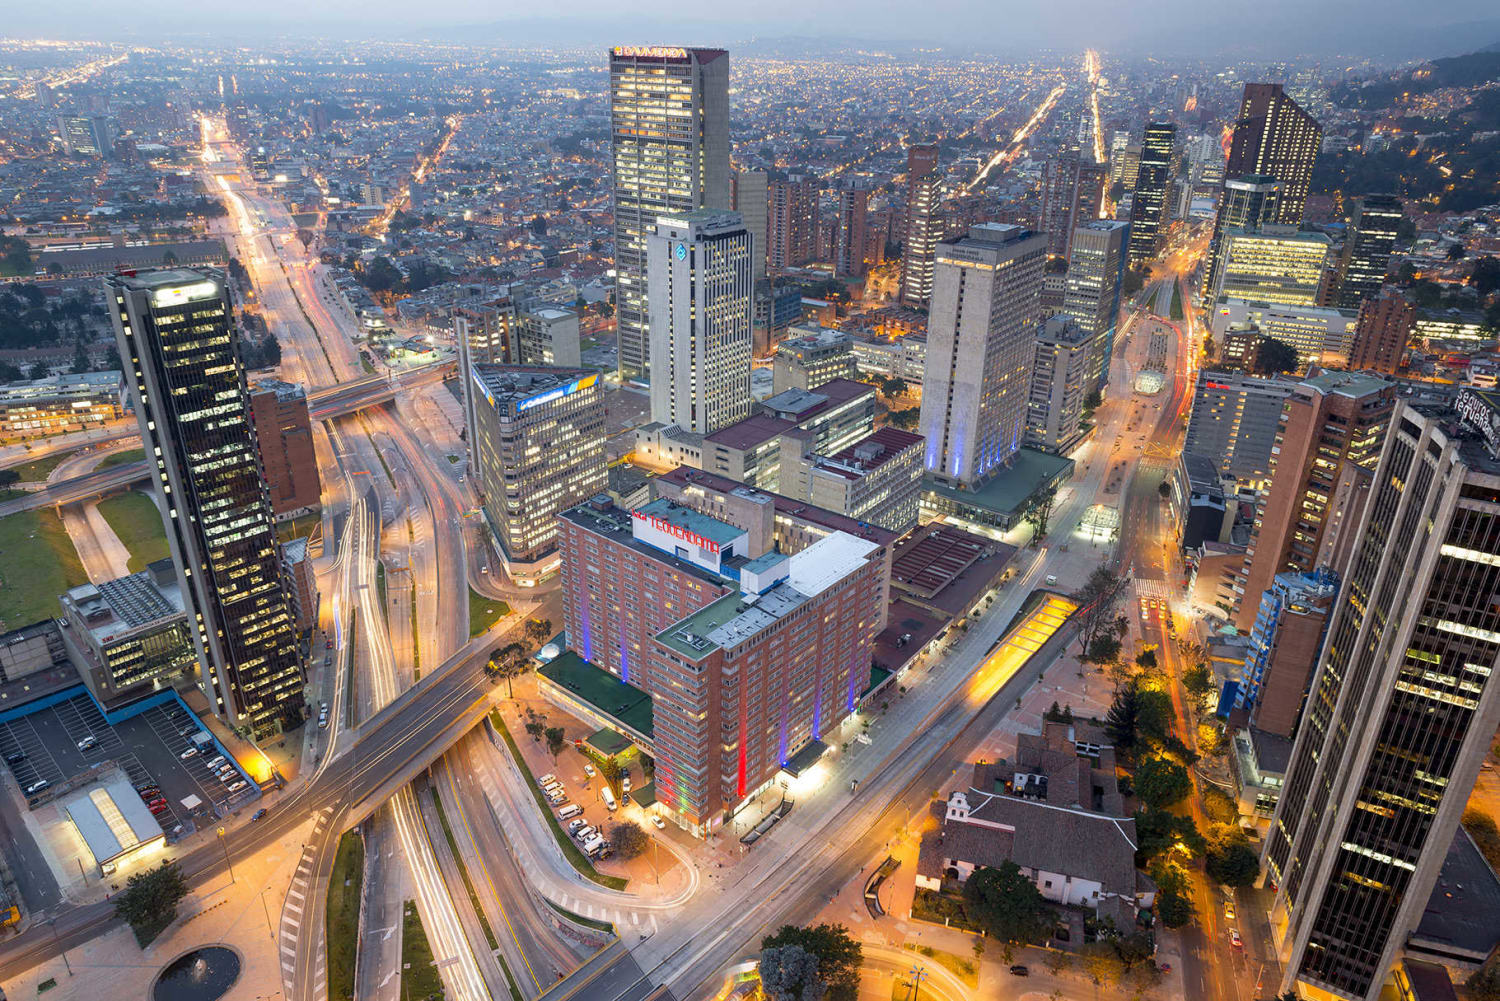 Bogota's downtown at sunset